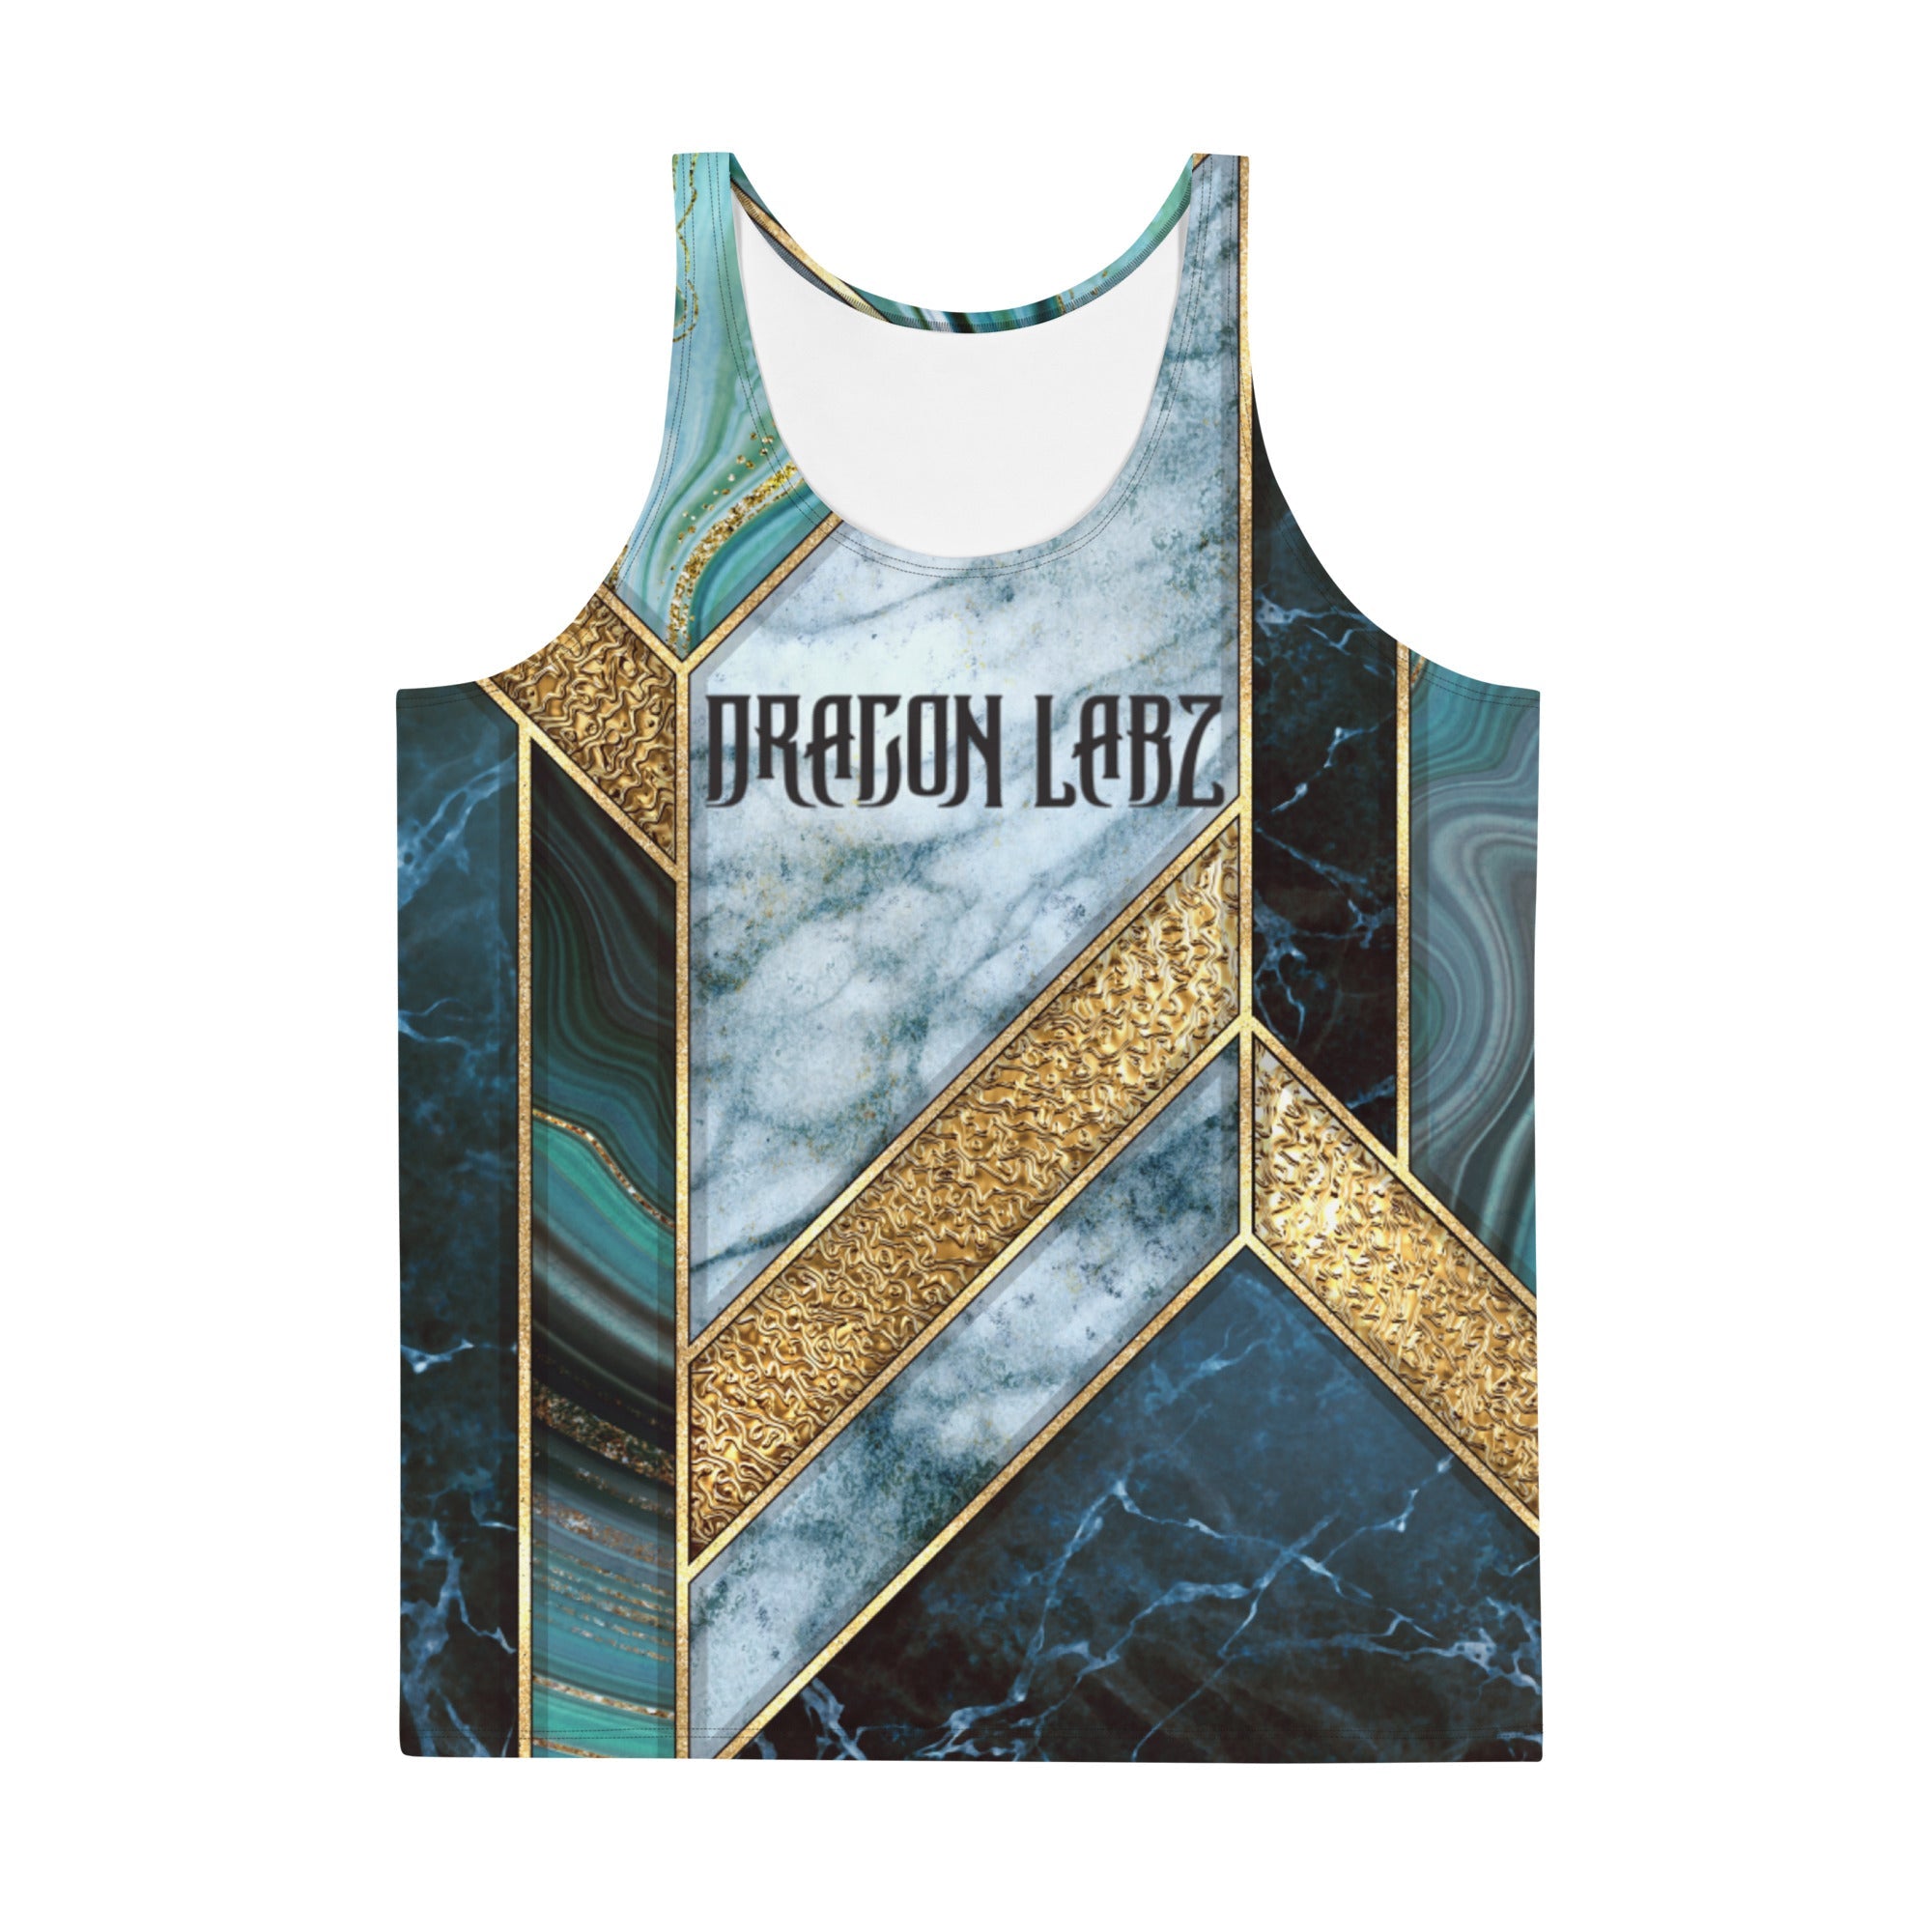 Local Hero Dragon Labz Tank - Krazy Muscle Nutrition Krazy Muscle Nutrition2437511_9049